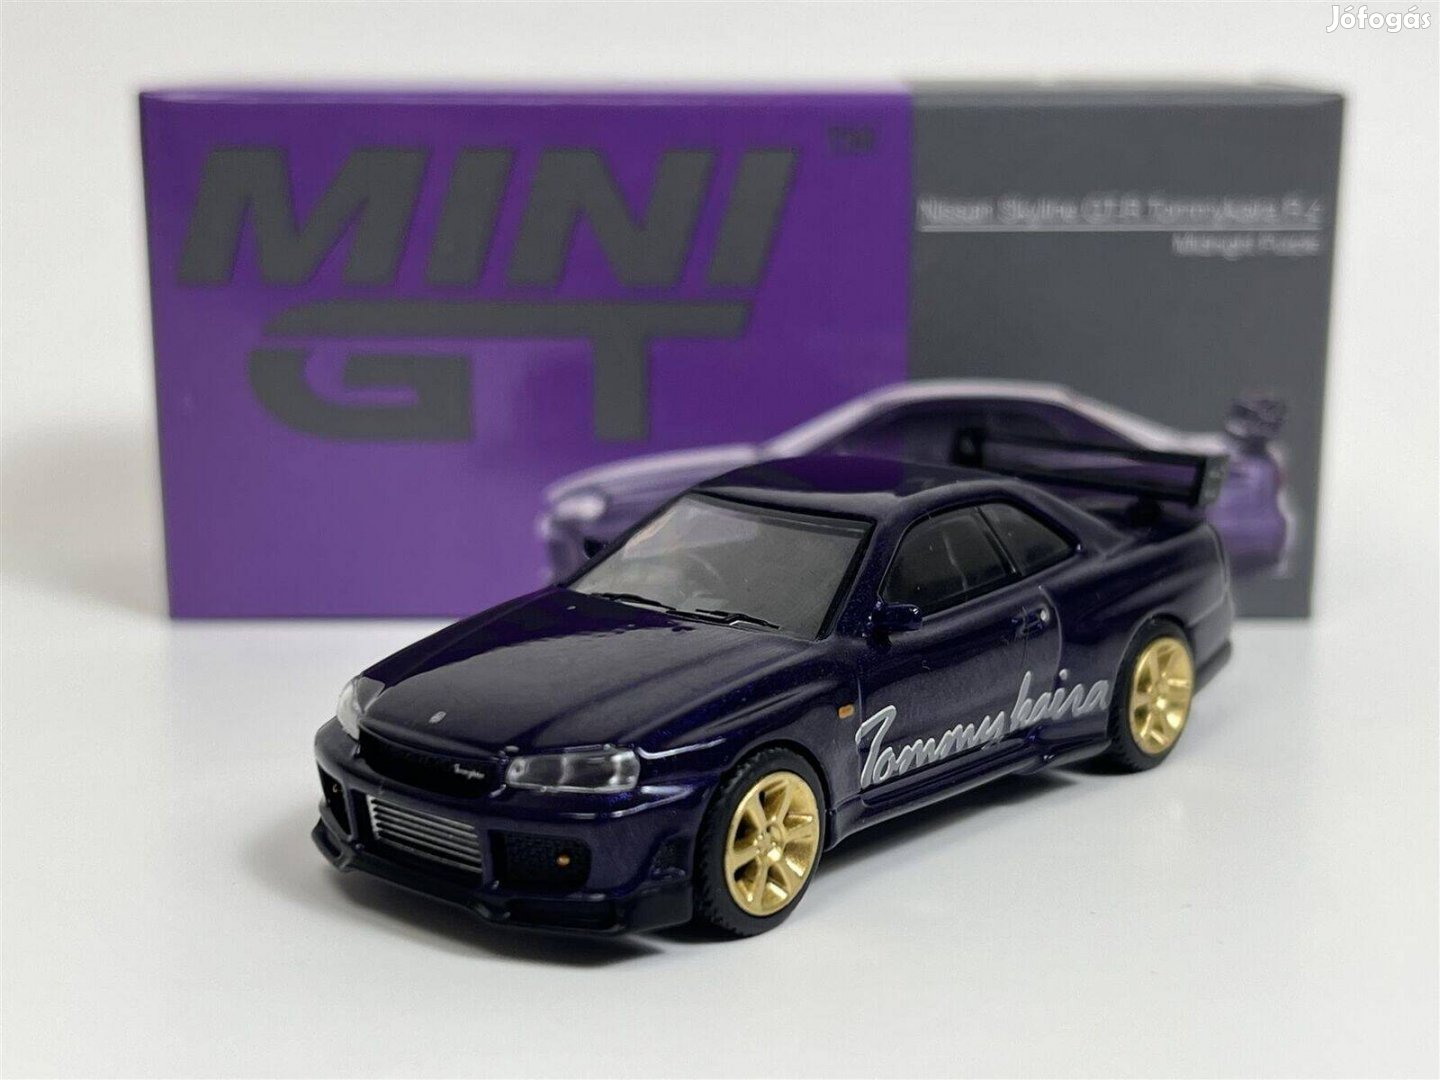 Mini GT Nissan Skyline GT-R (R34) Tommykaira R-z Midnight Purple